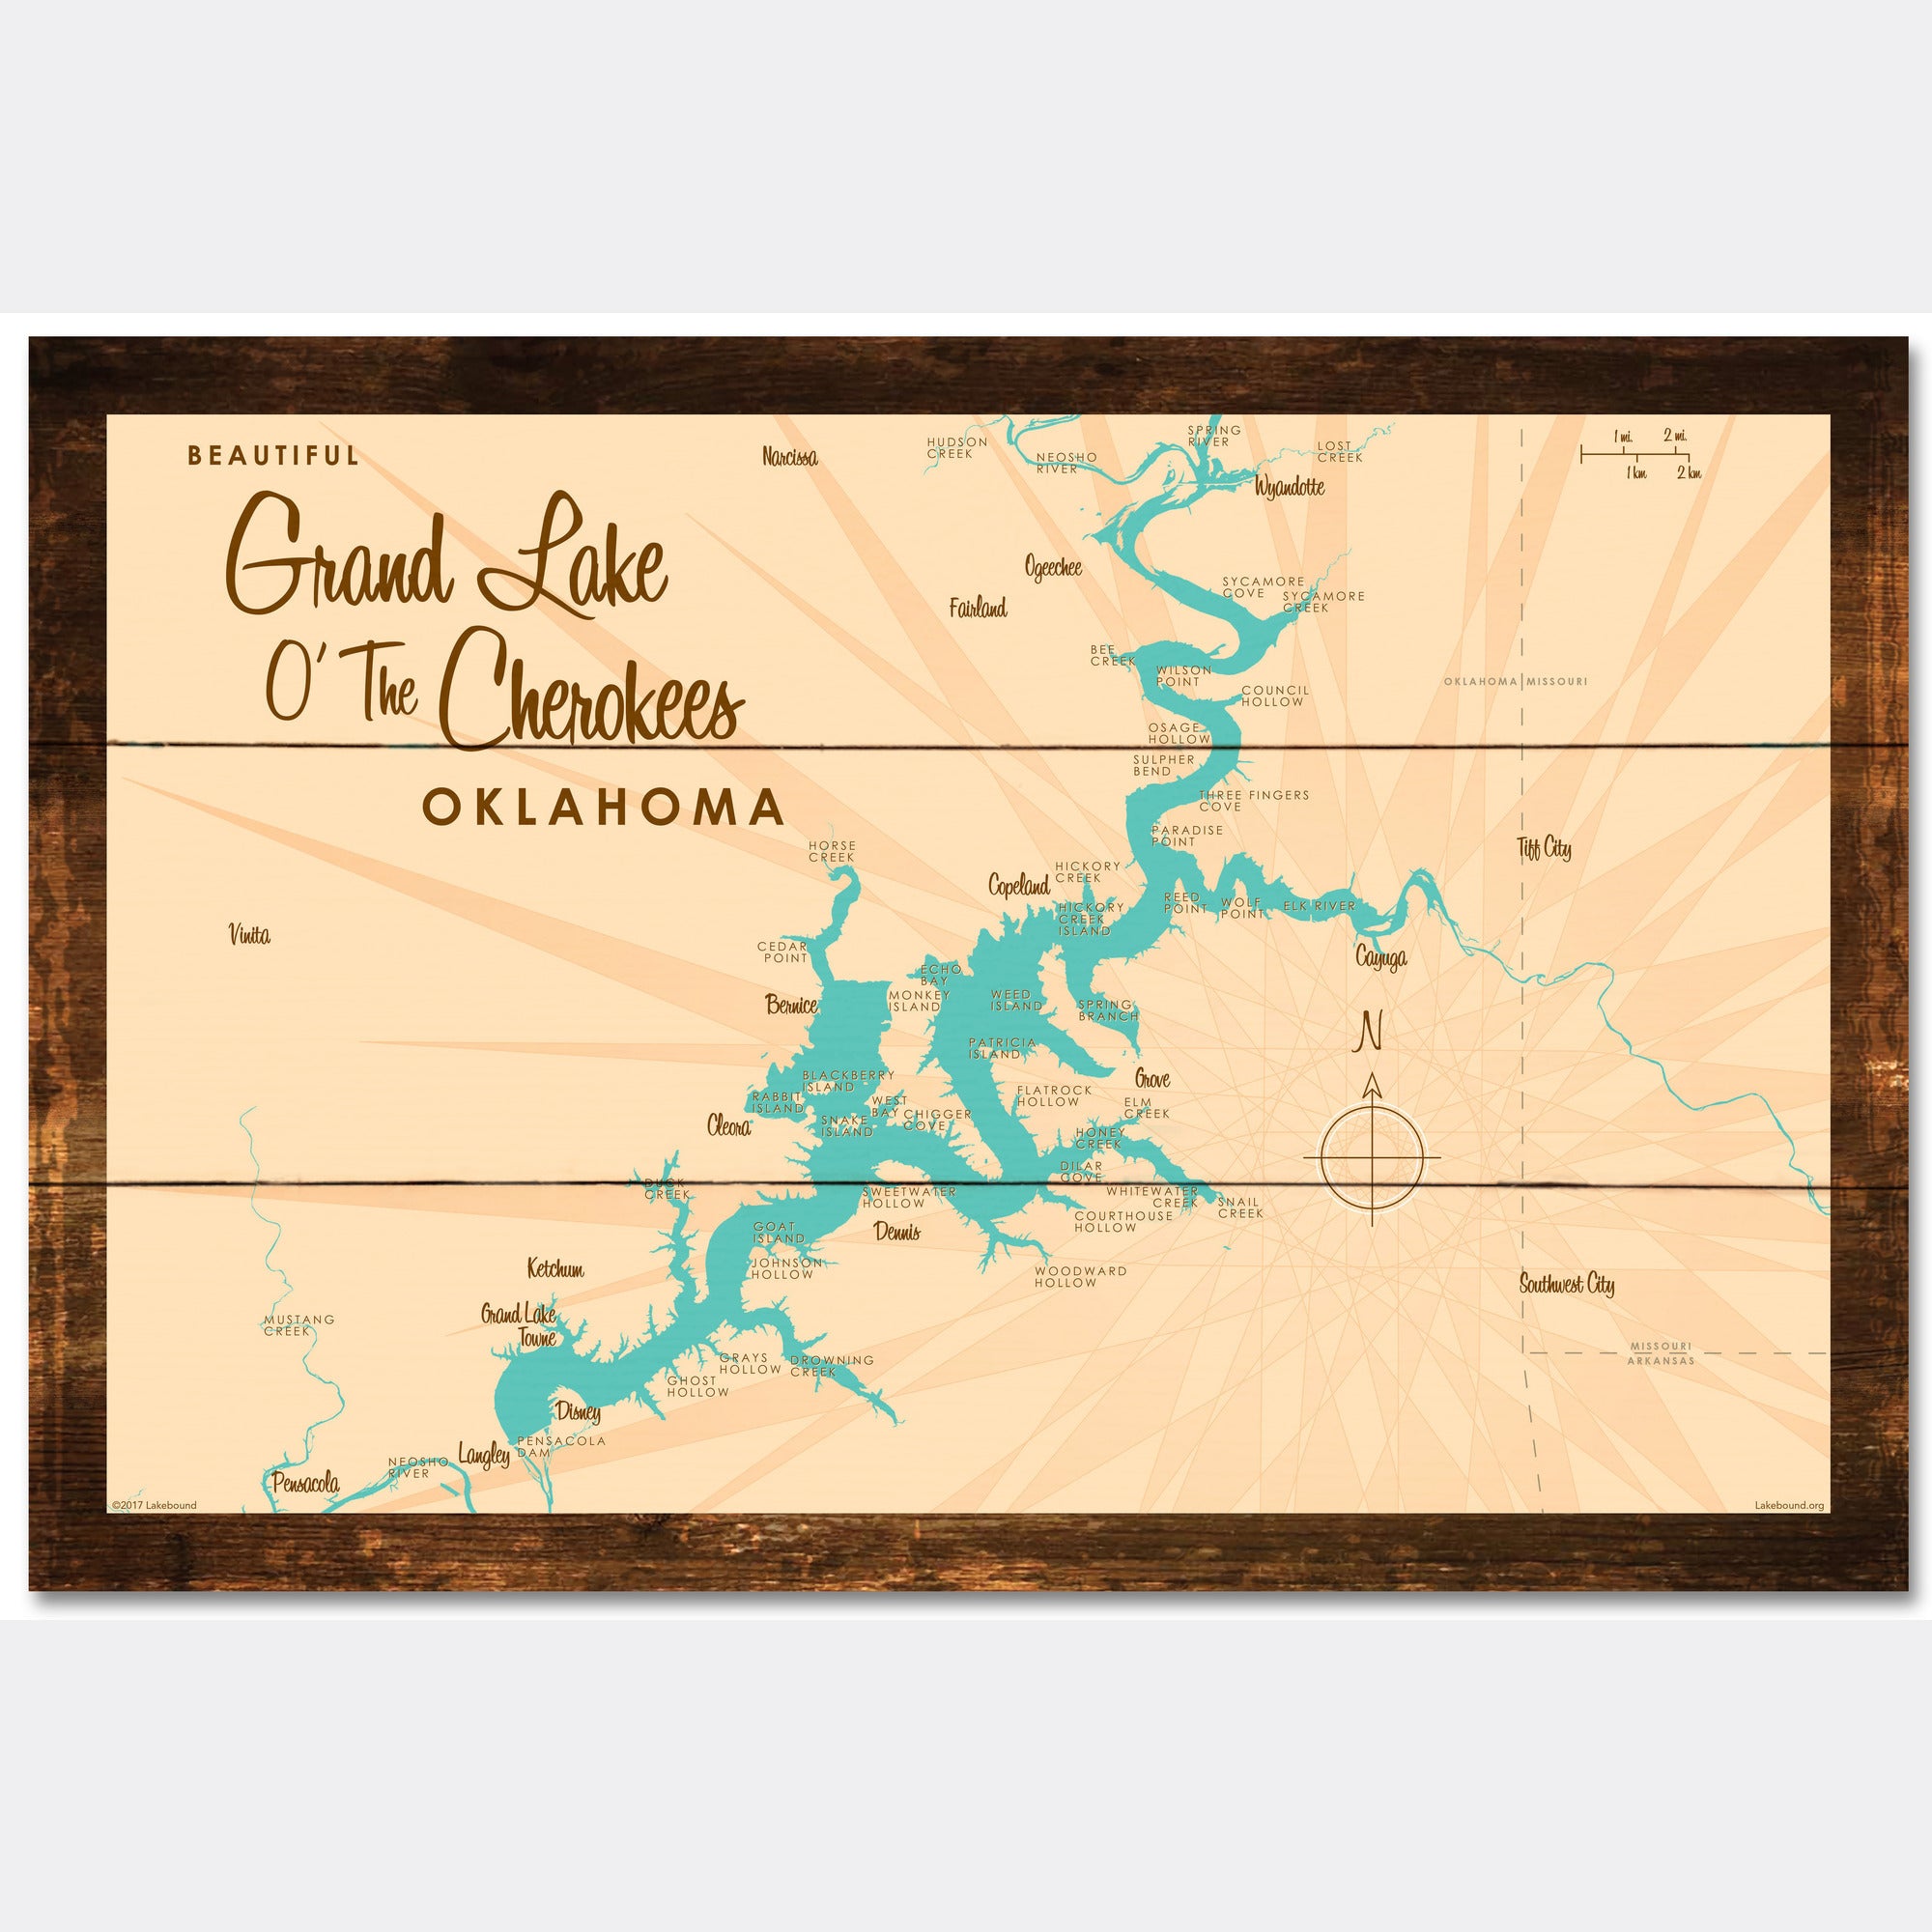 Grand Lake O' The Cherokees Oklahoma, Rustic Wood Sign Map Art